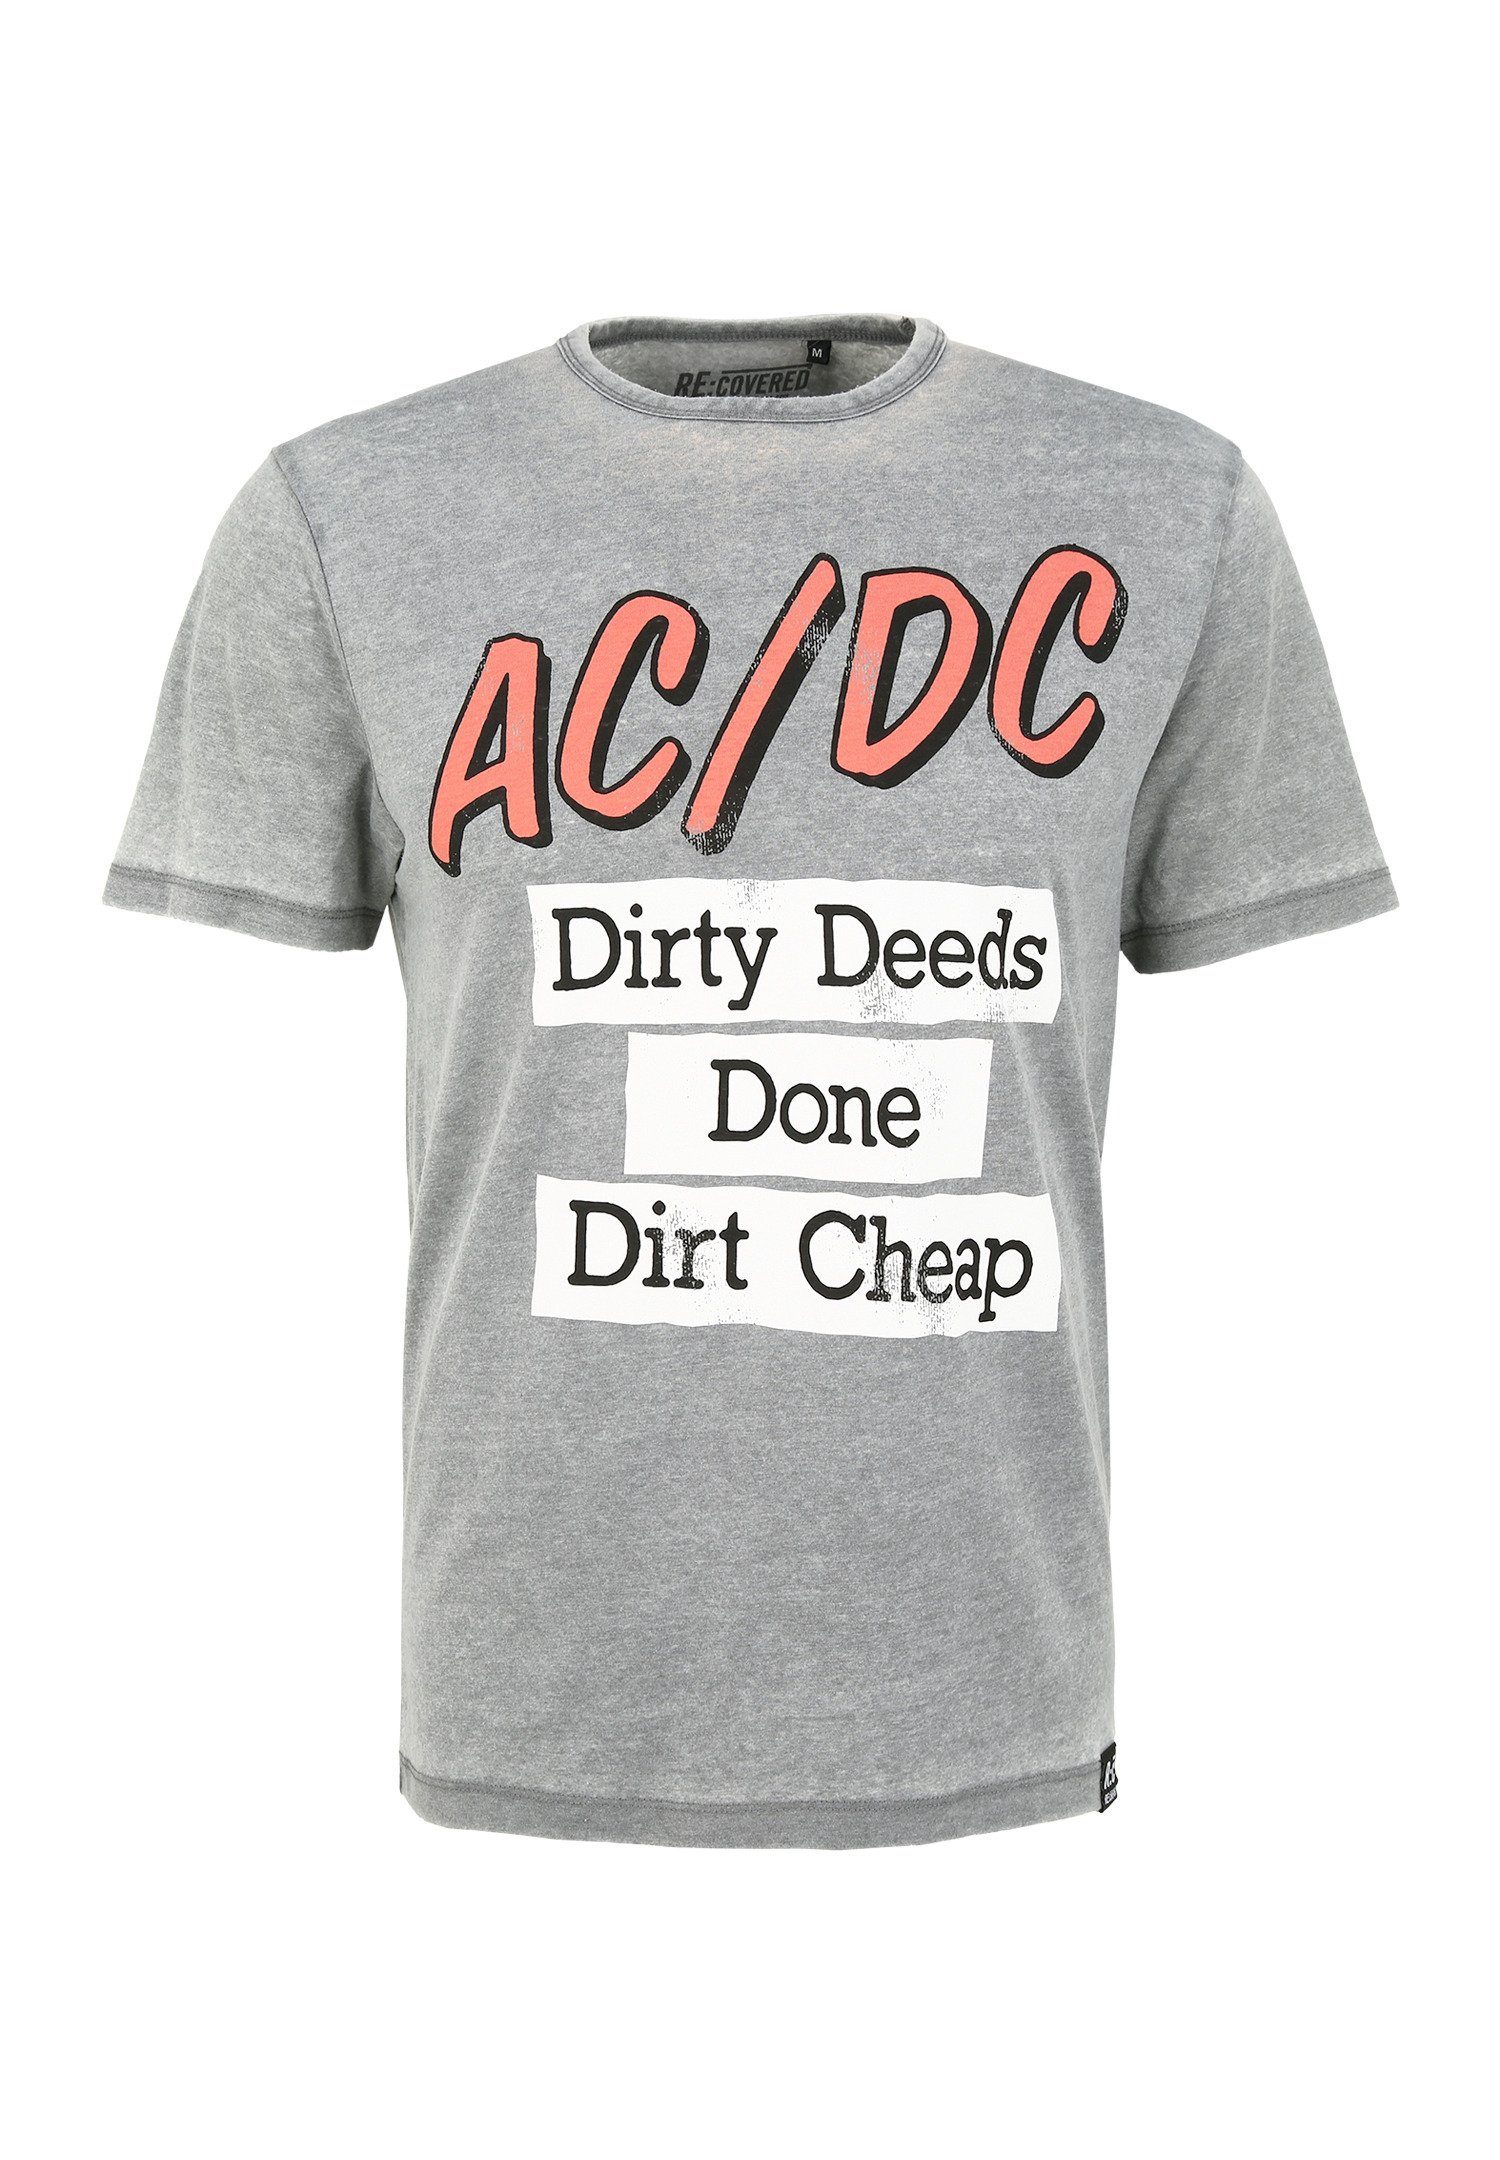 Light GOTS Bio-Baumwolle Done Recovered Dirty Grey Deeds Cheap T-Shirt ACDC zertifizierte